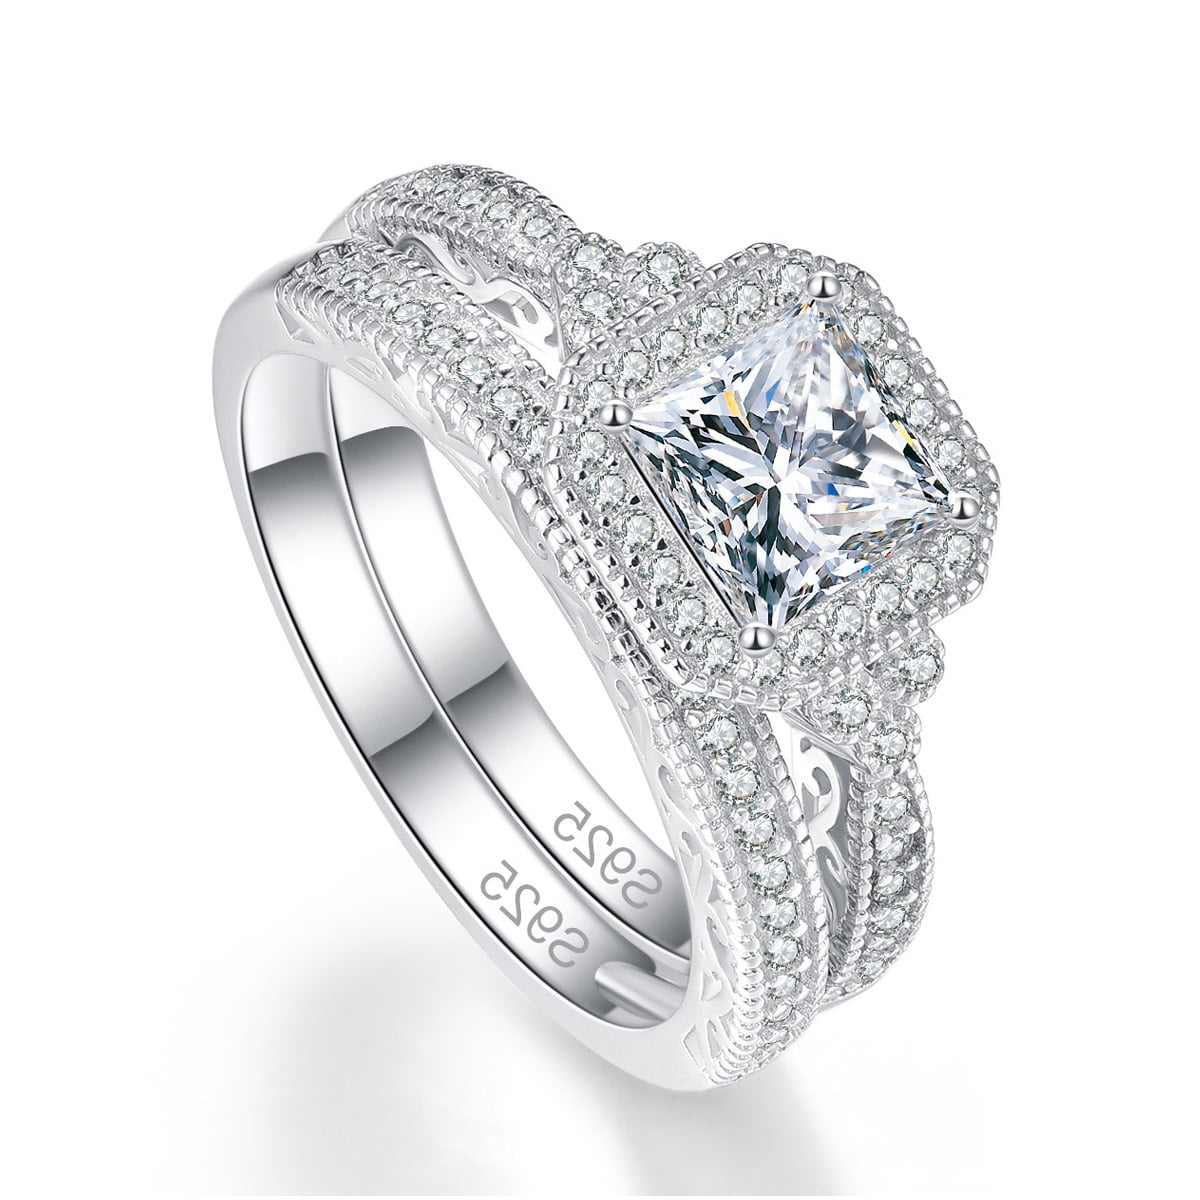 925 Silver White Topaz Set Infinity Fashion Jewelry Women Wedding Ring Sz 5-10 